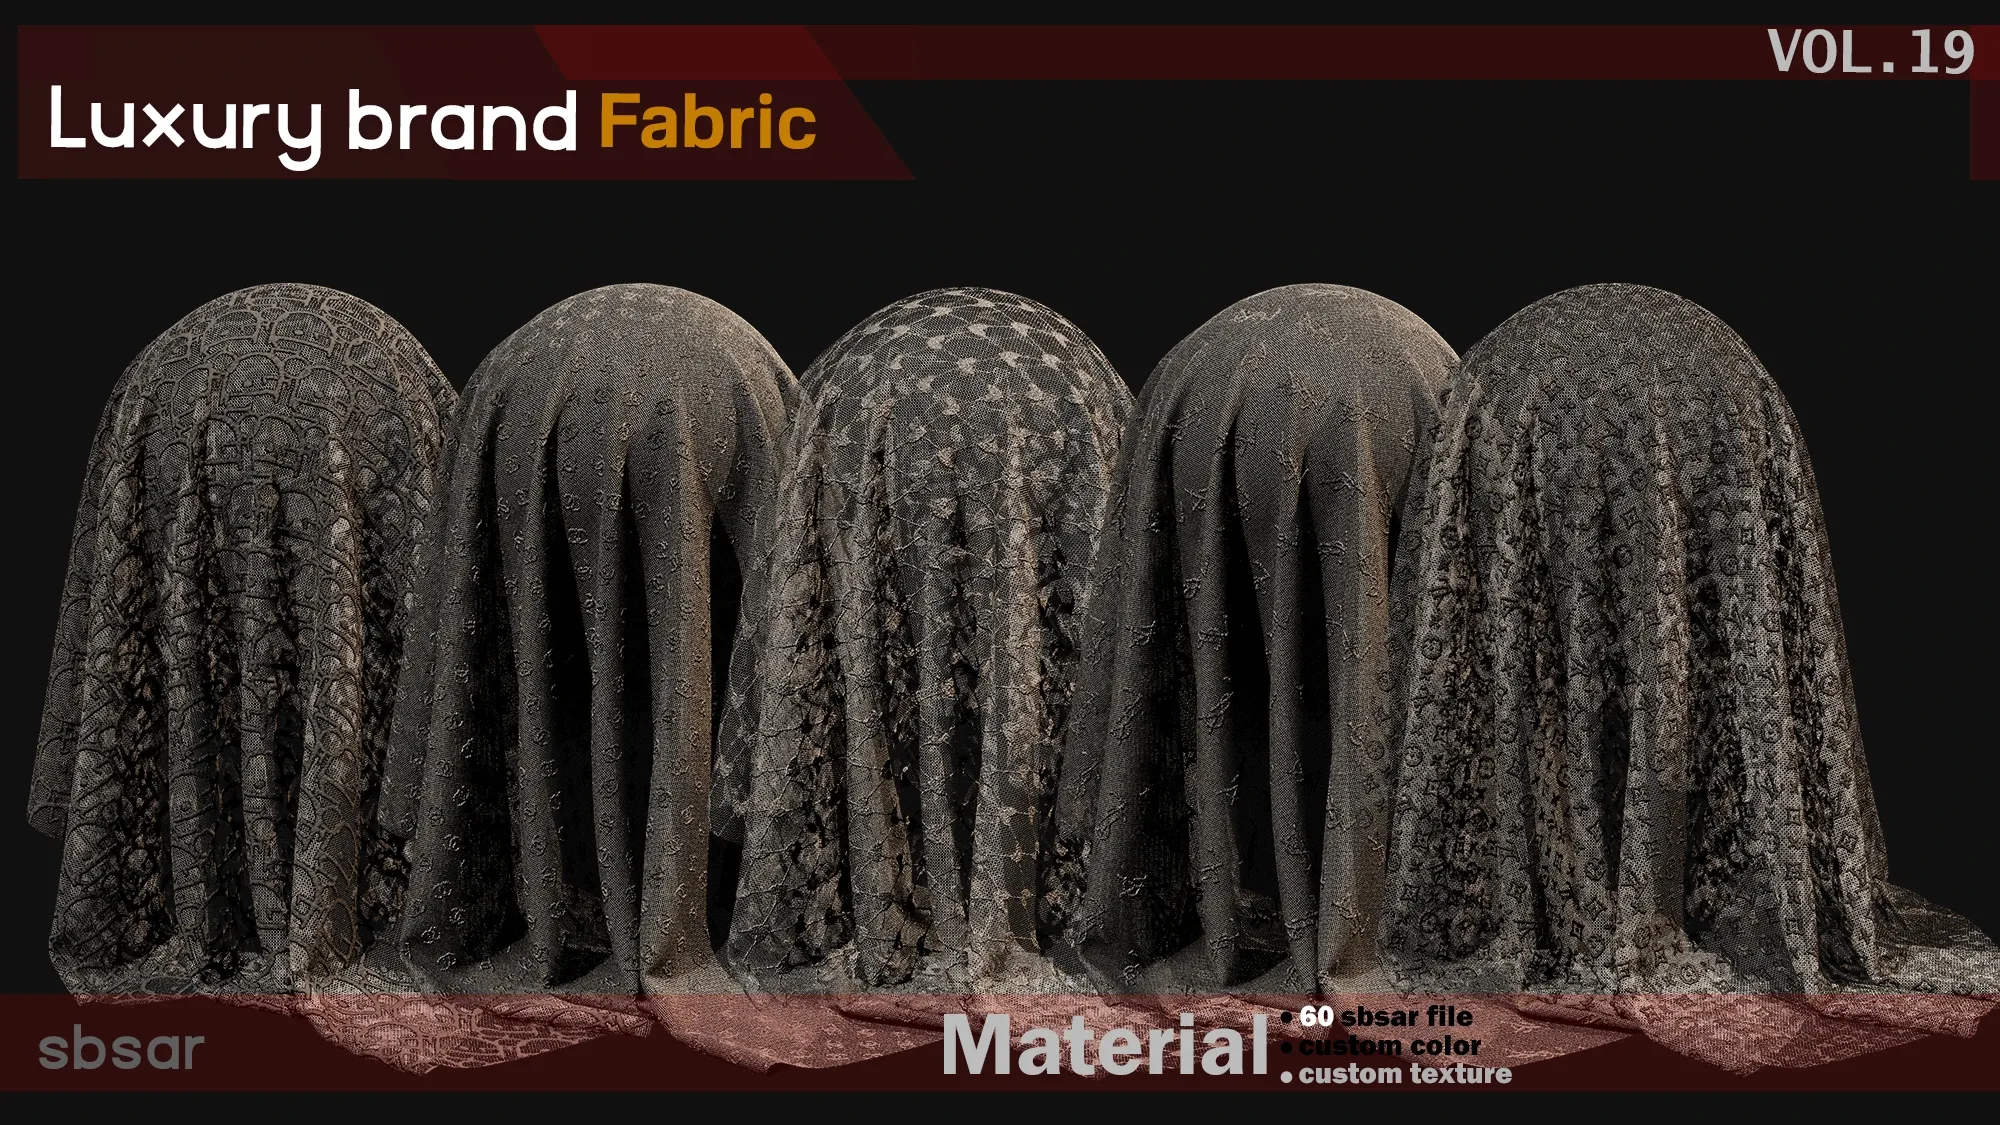 65 Luxury brand fabric Material -SBSAR -custom color -custom fabric -VOL 19